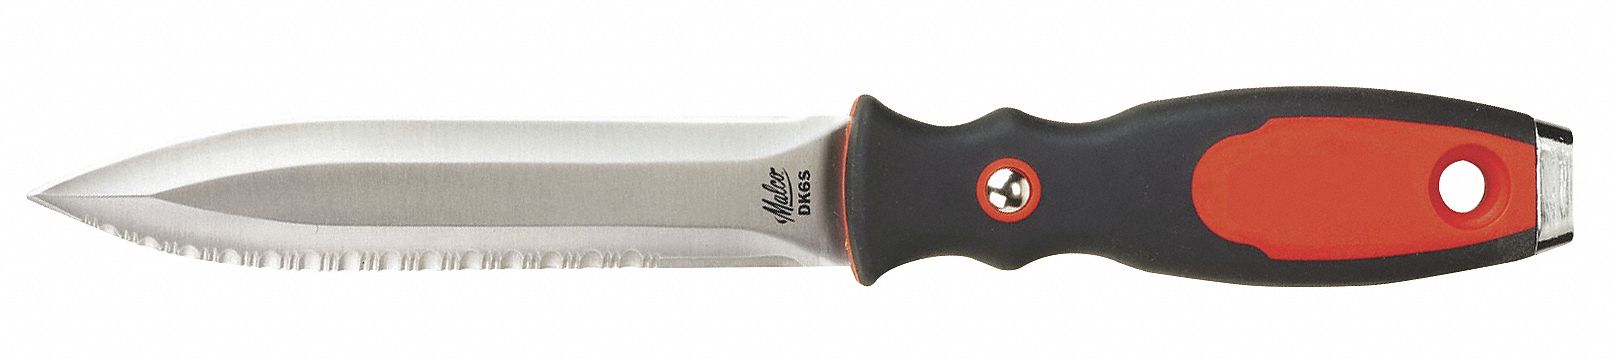 1ELJ7 - Duct Knife Serrated 6 In Blade